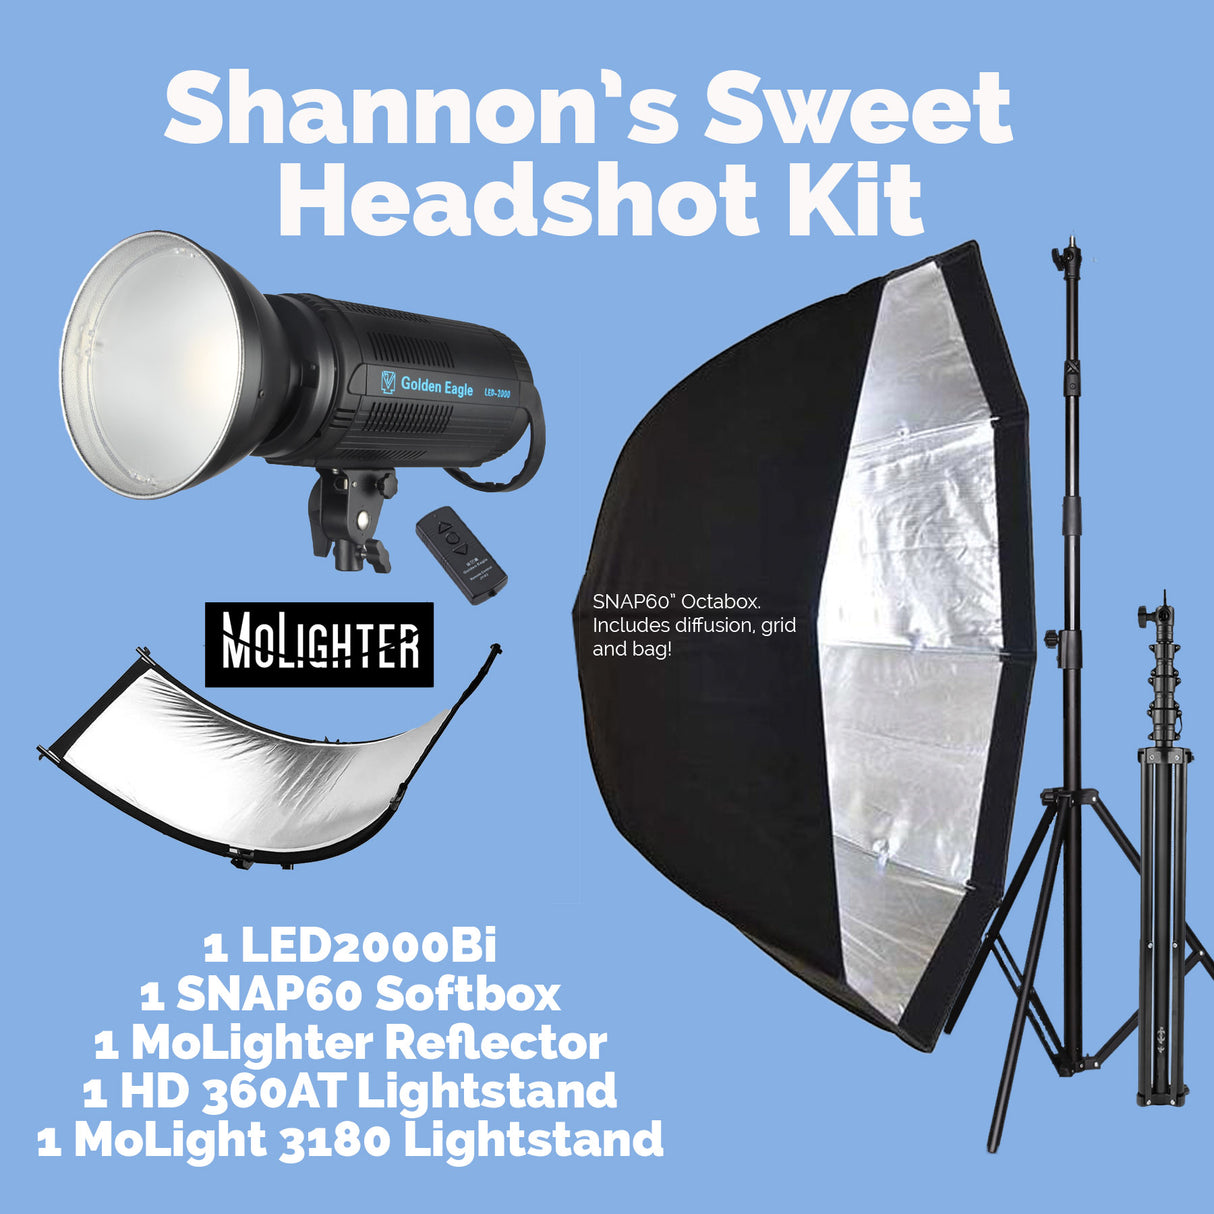 Shannon's Sweet Headshot Kit